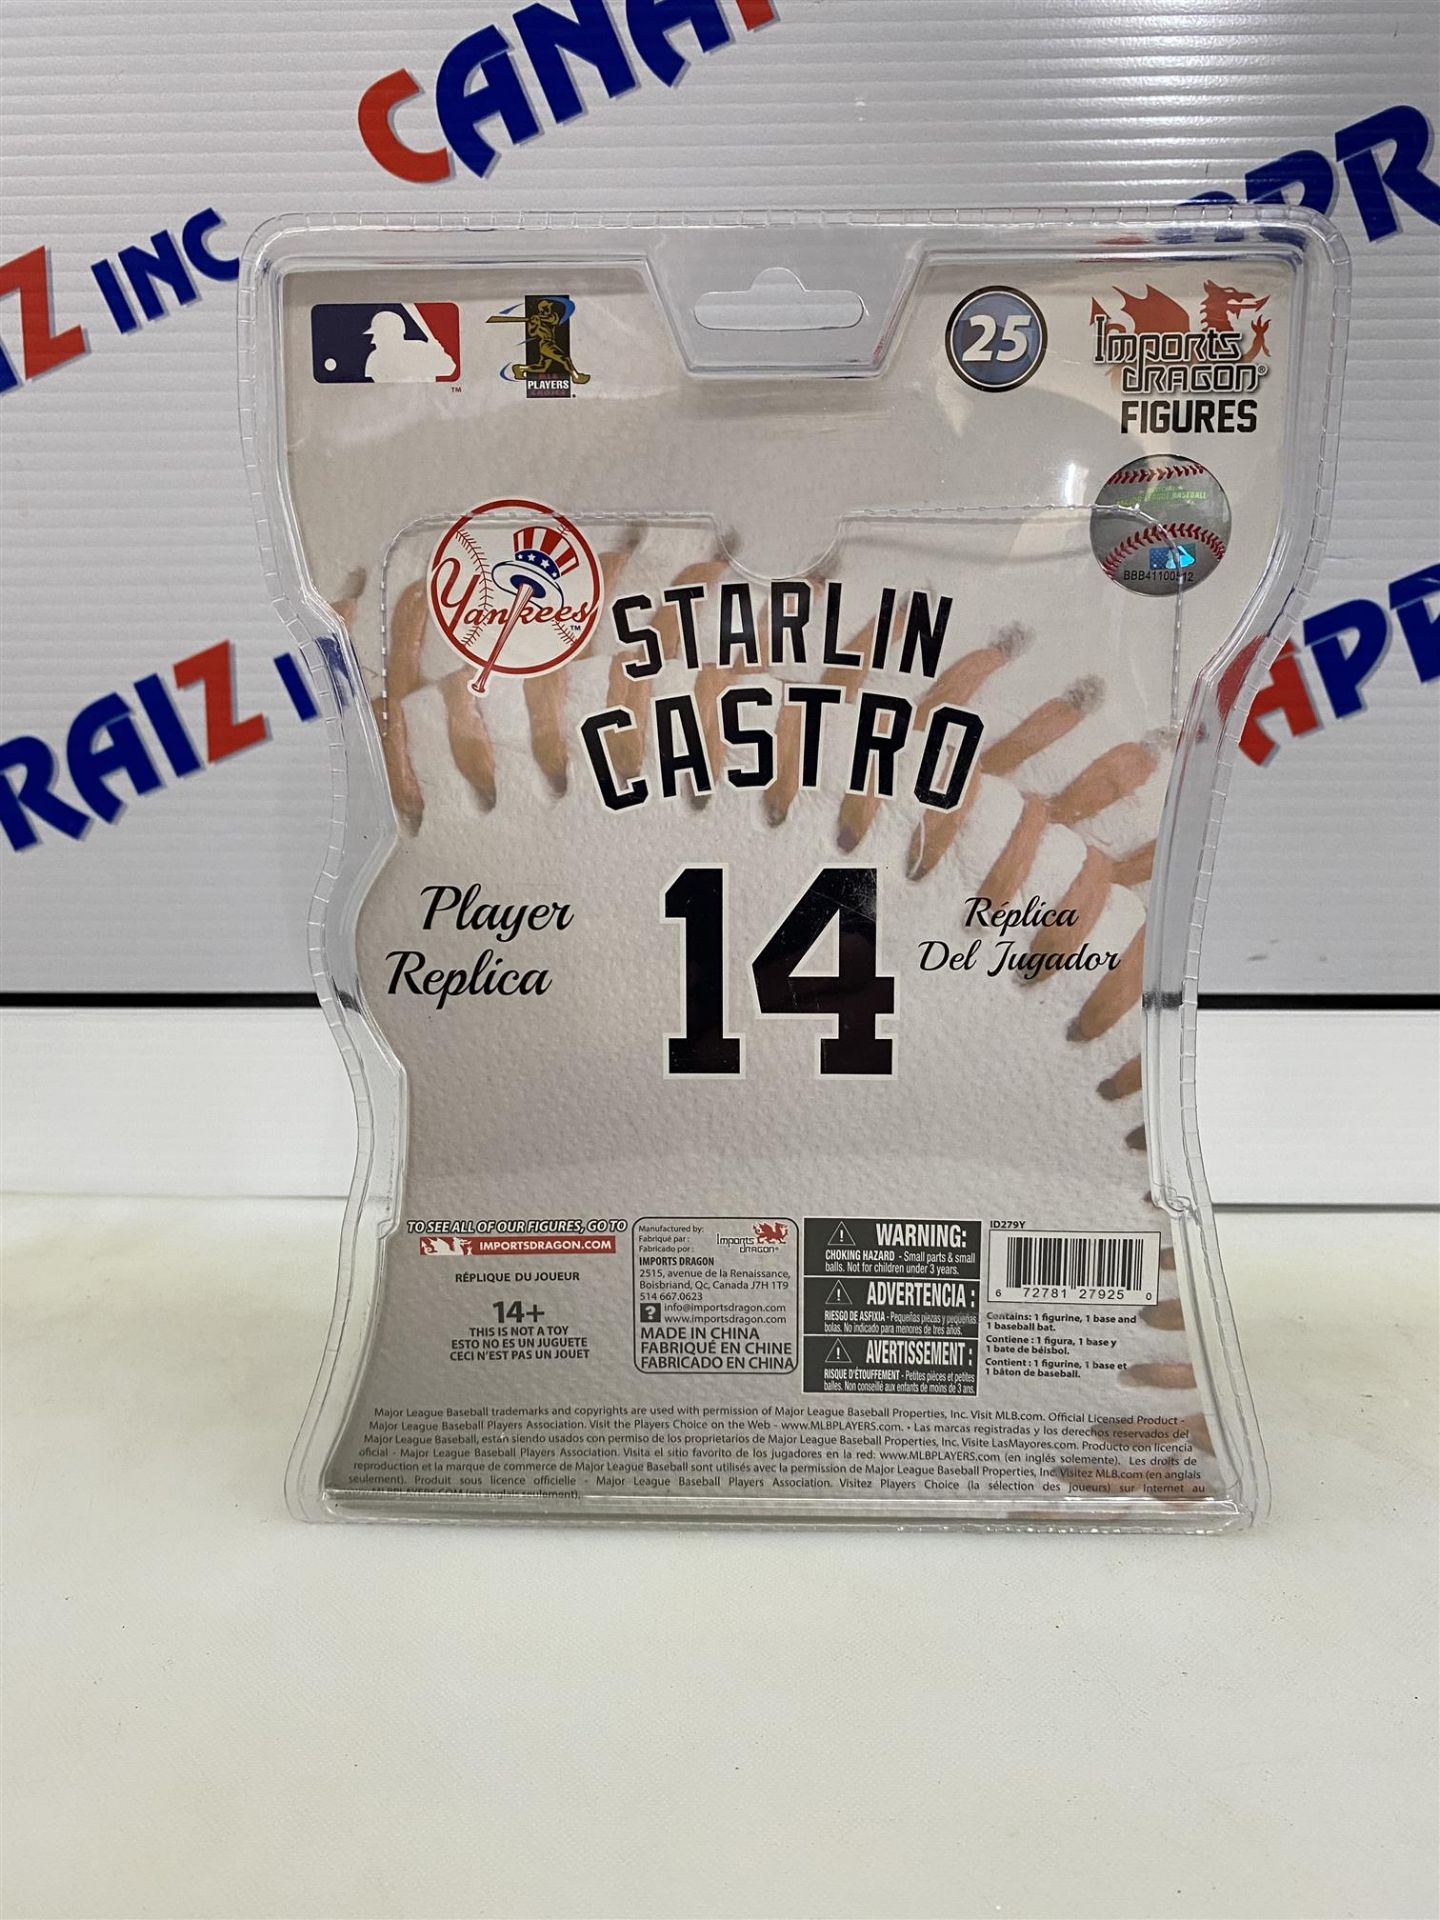 Imports Dragon Baseball Figures - (Player Replica) NEW YORK - CASTRO 14 - Image 2 of 2